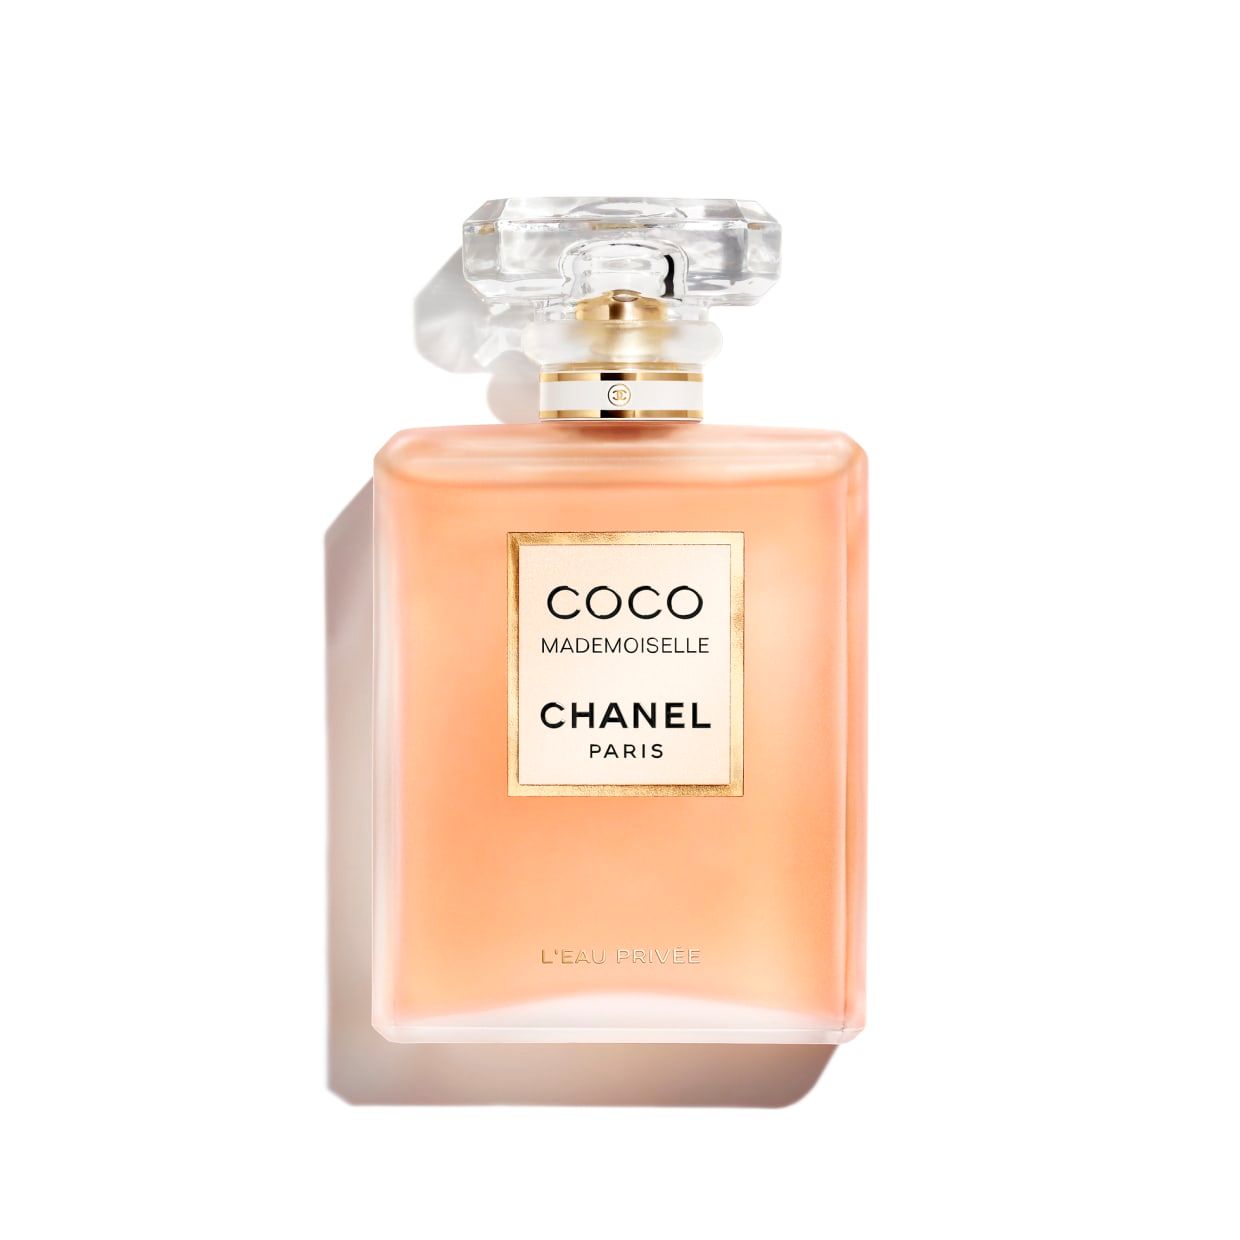 Chanel Coco Mademoiselle L’eau Privee – LAMI PERFUME - AUTHENTIC FRAGRANCES